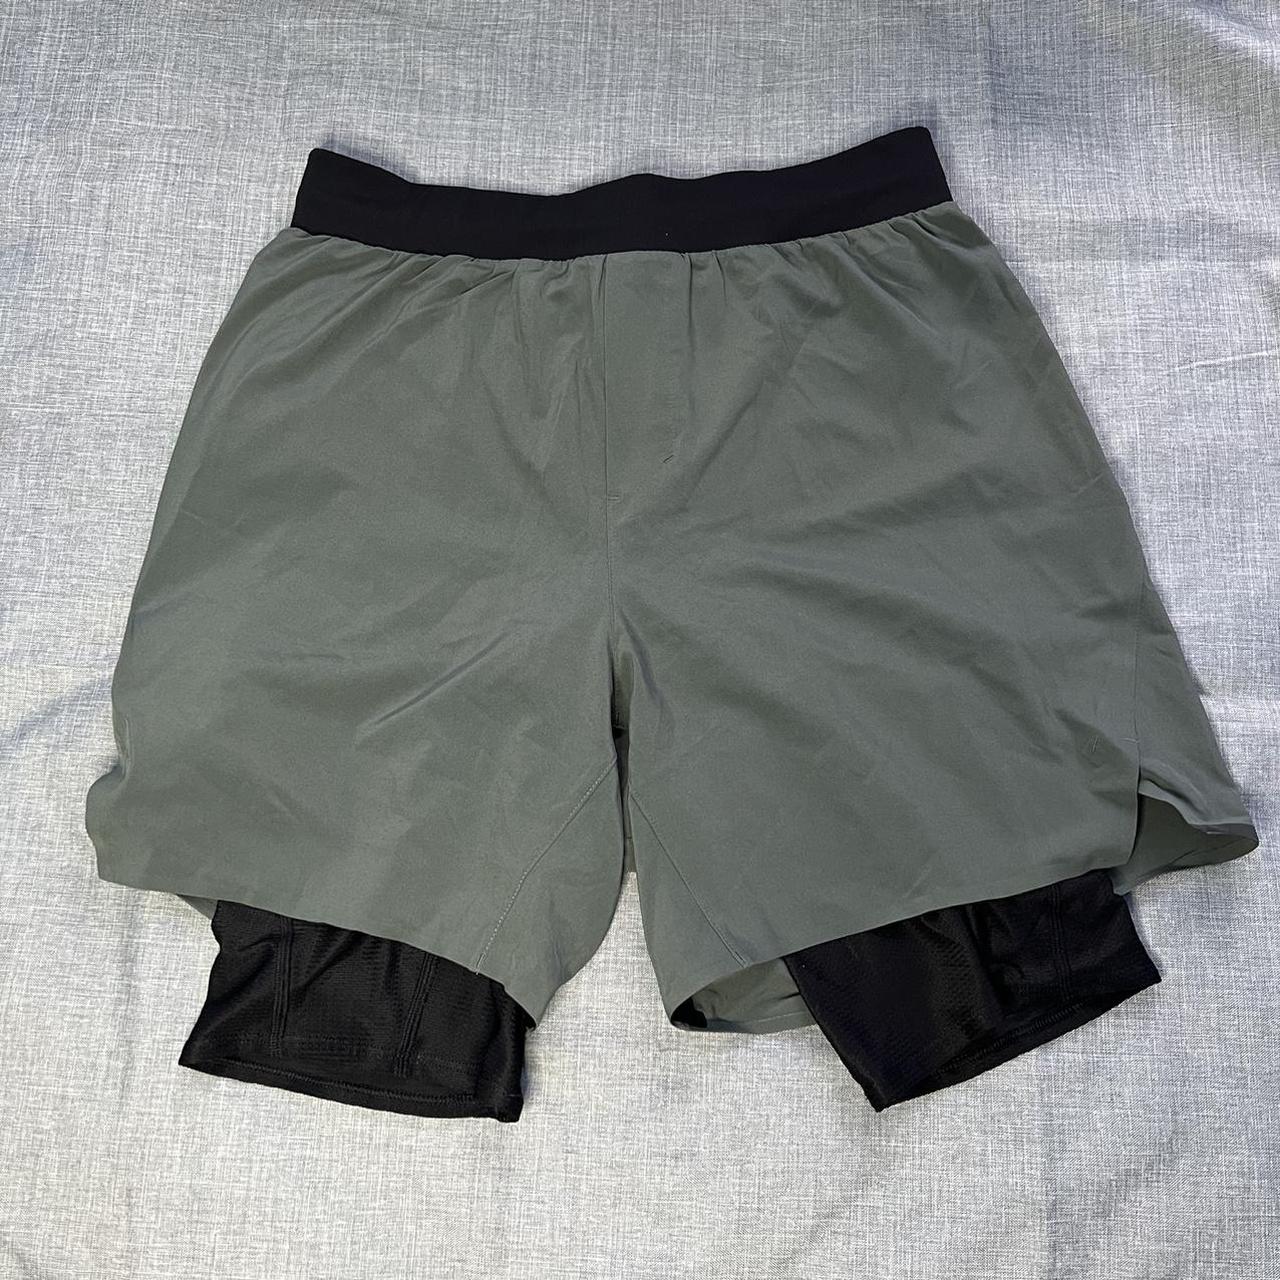 Men’s dark green Lululemon athletic shorts with... - Depop